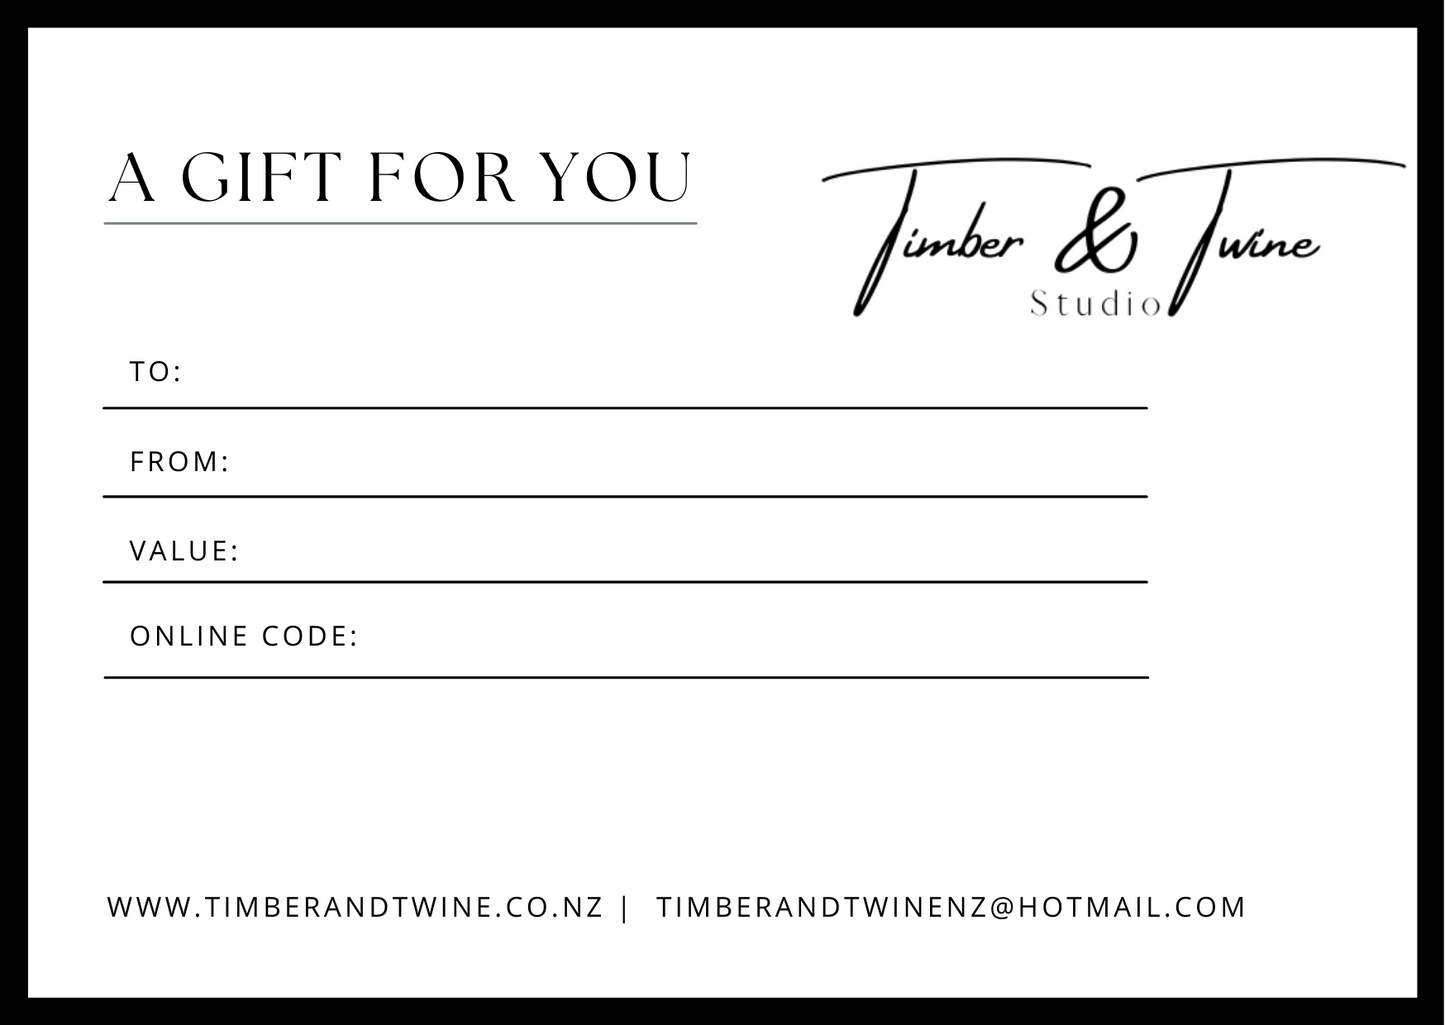 Timber & Twine Studio Gift Card